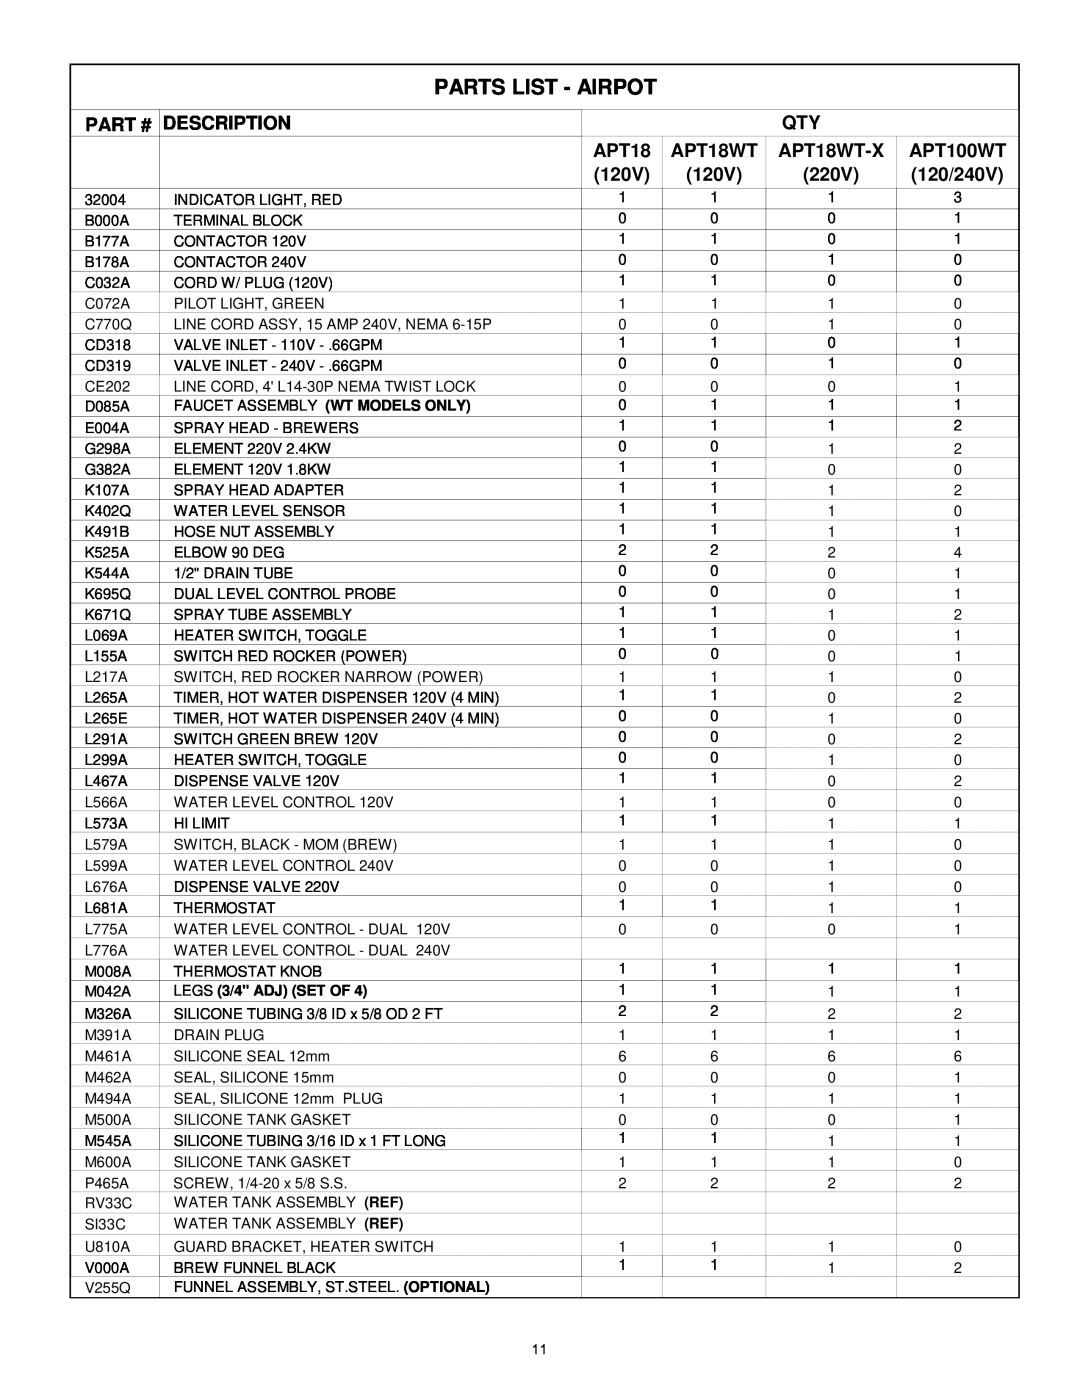 Cecilware Parts List - Airpot, Part #, Description, APT18WT-X, 120V, APT100WT, 220V, 120/240V, LEGS 3/4 ADJ SET OF 